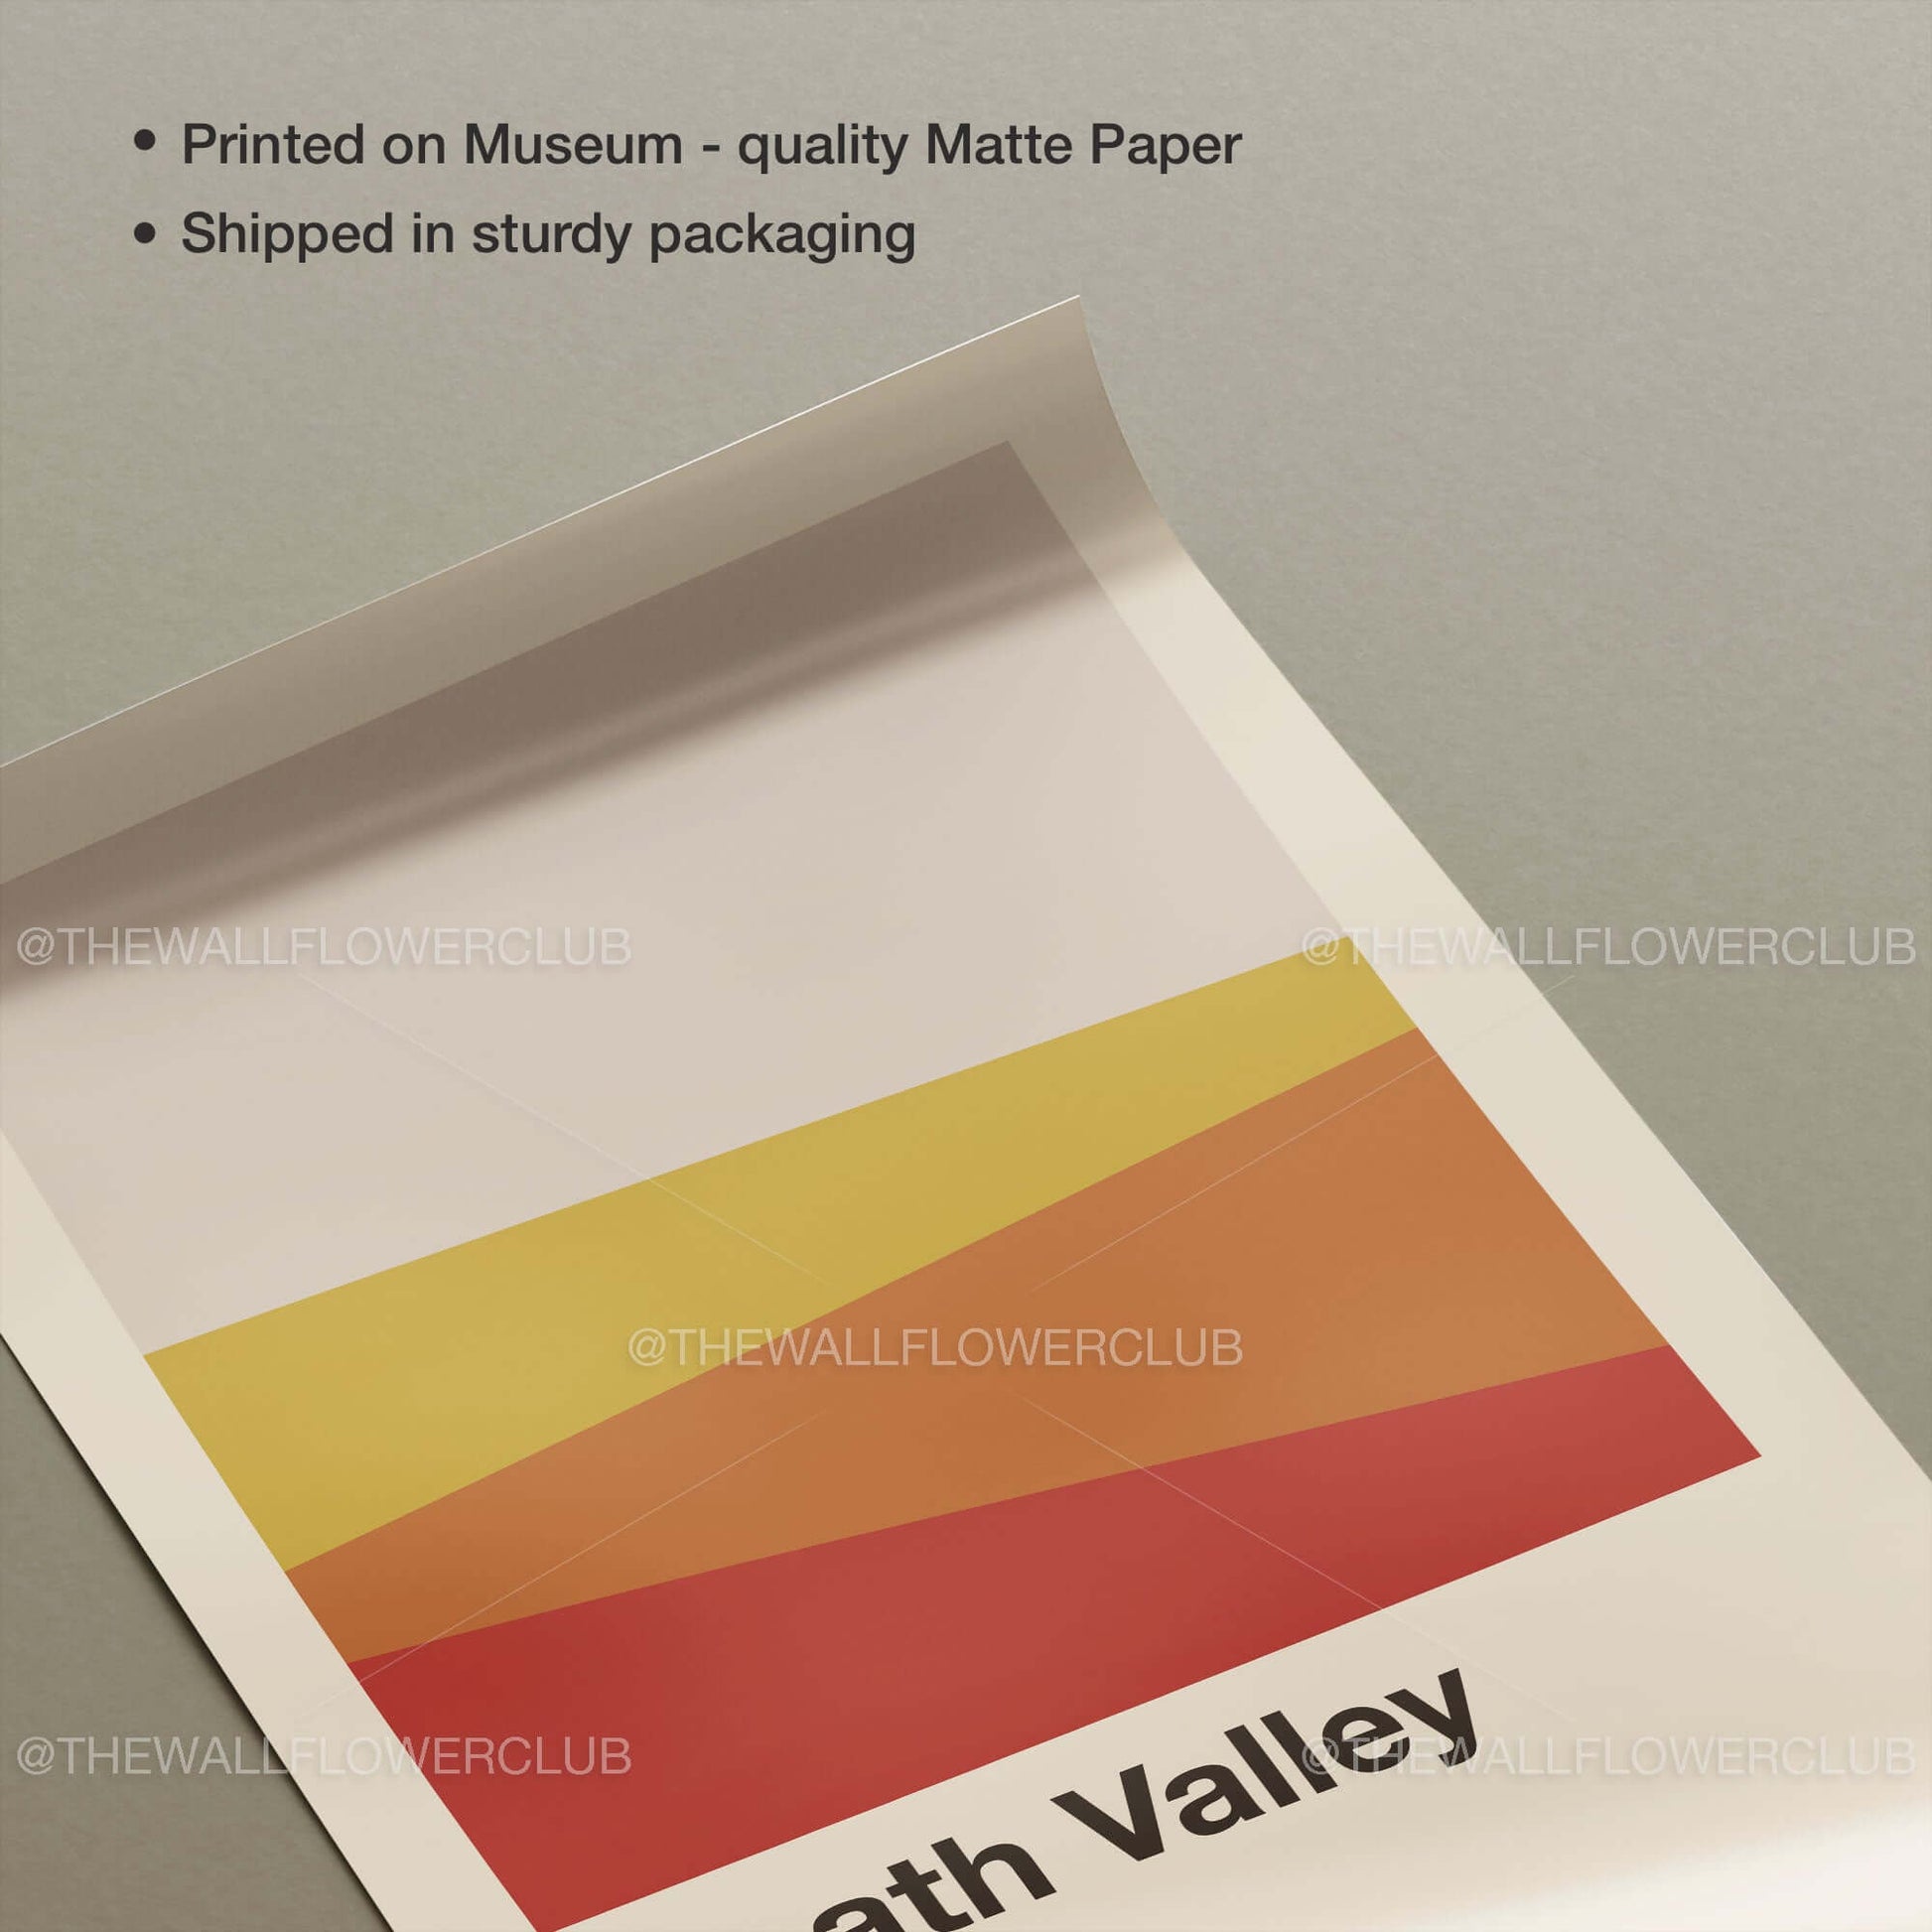 Death Valley National Park - Print Arts - death valley, national park prints